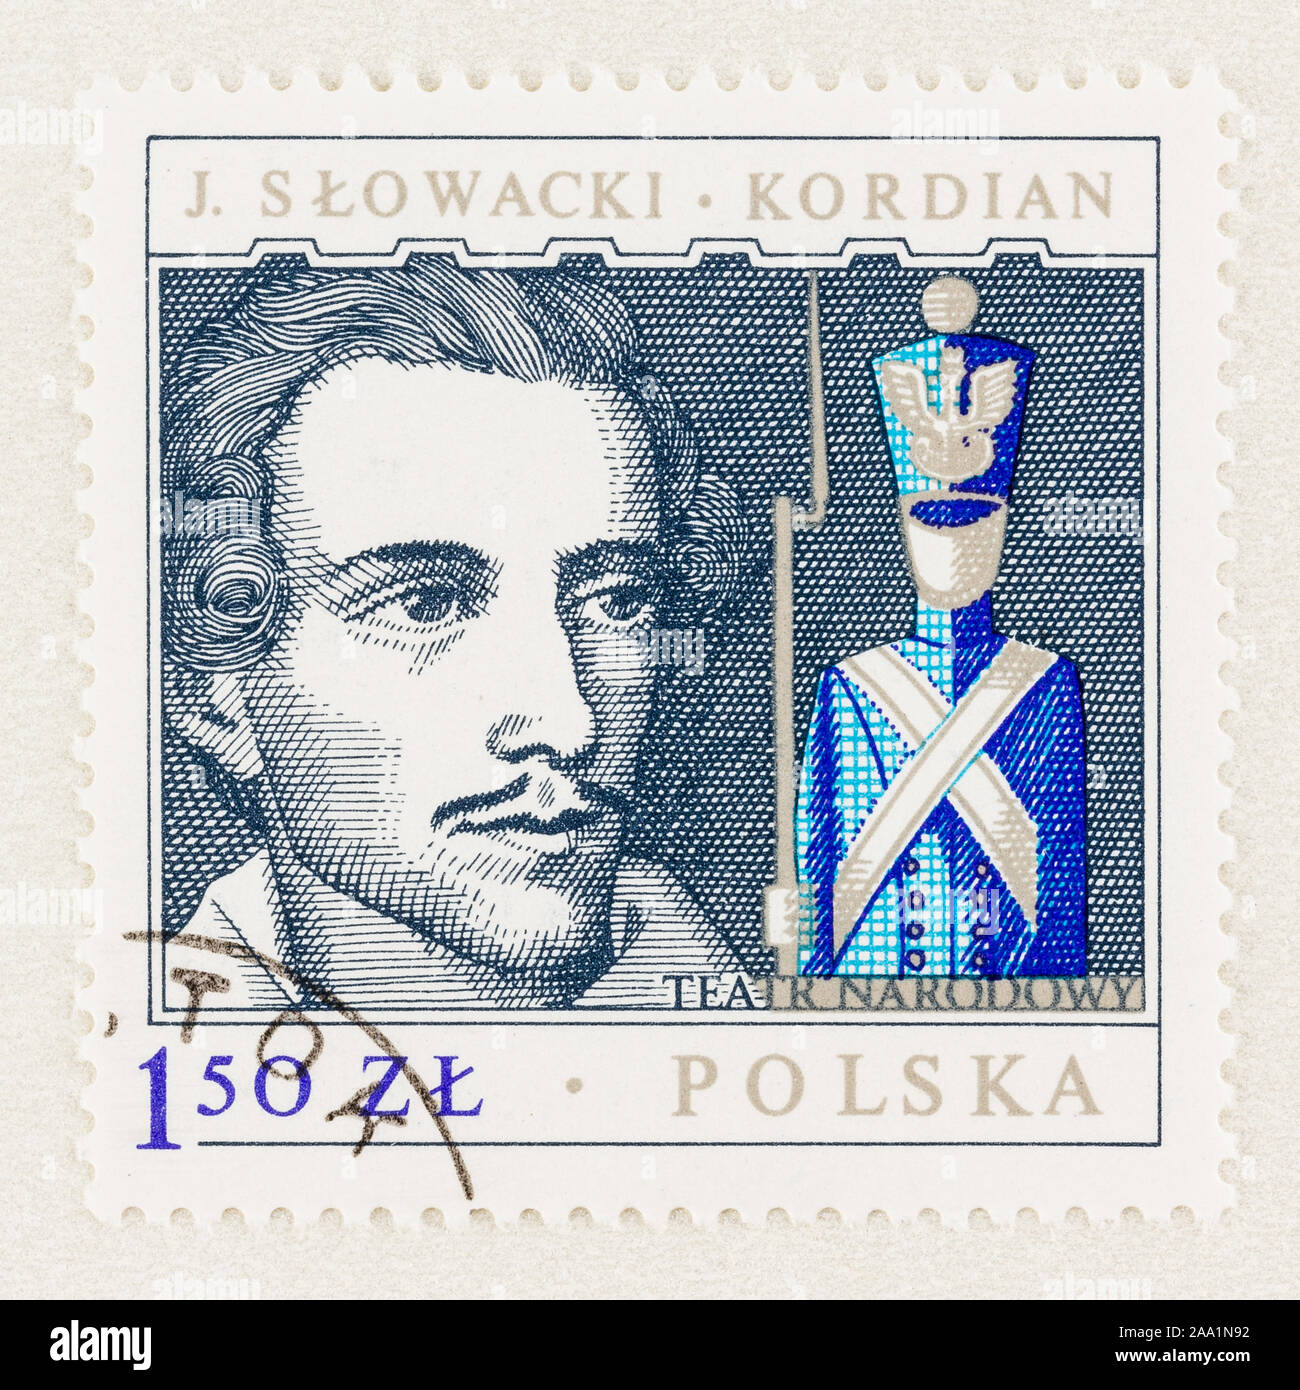 SEATTLE WASHINGTON- October 9, 2018: Poland postage stamp commemorating the National Theater, with J Slowacki portrait, a Polish playwright and poet. Stock Photo